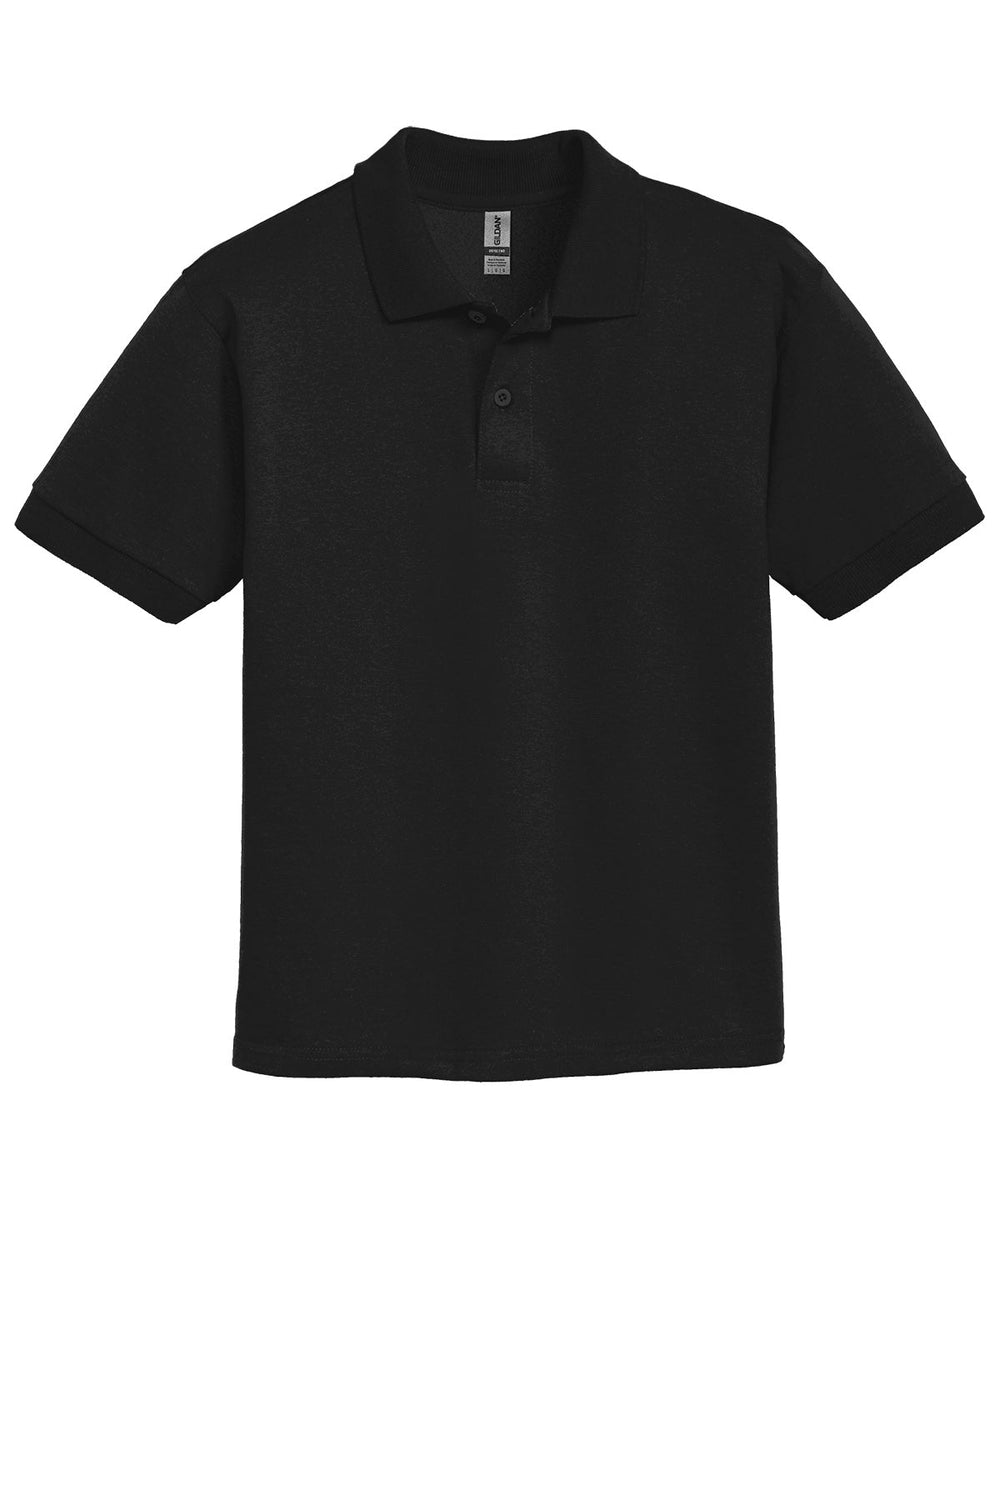 CCS - 8800b Gildan Unisex Youth DryBlend 6-Ounce Jersey Knit Sport Shirt - Premium School Uniform from Pat's Monograms - Just $13! Shop now at Pat's Monograms